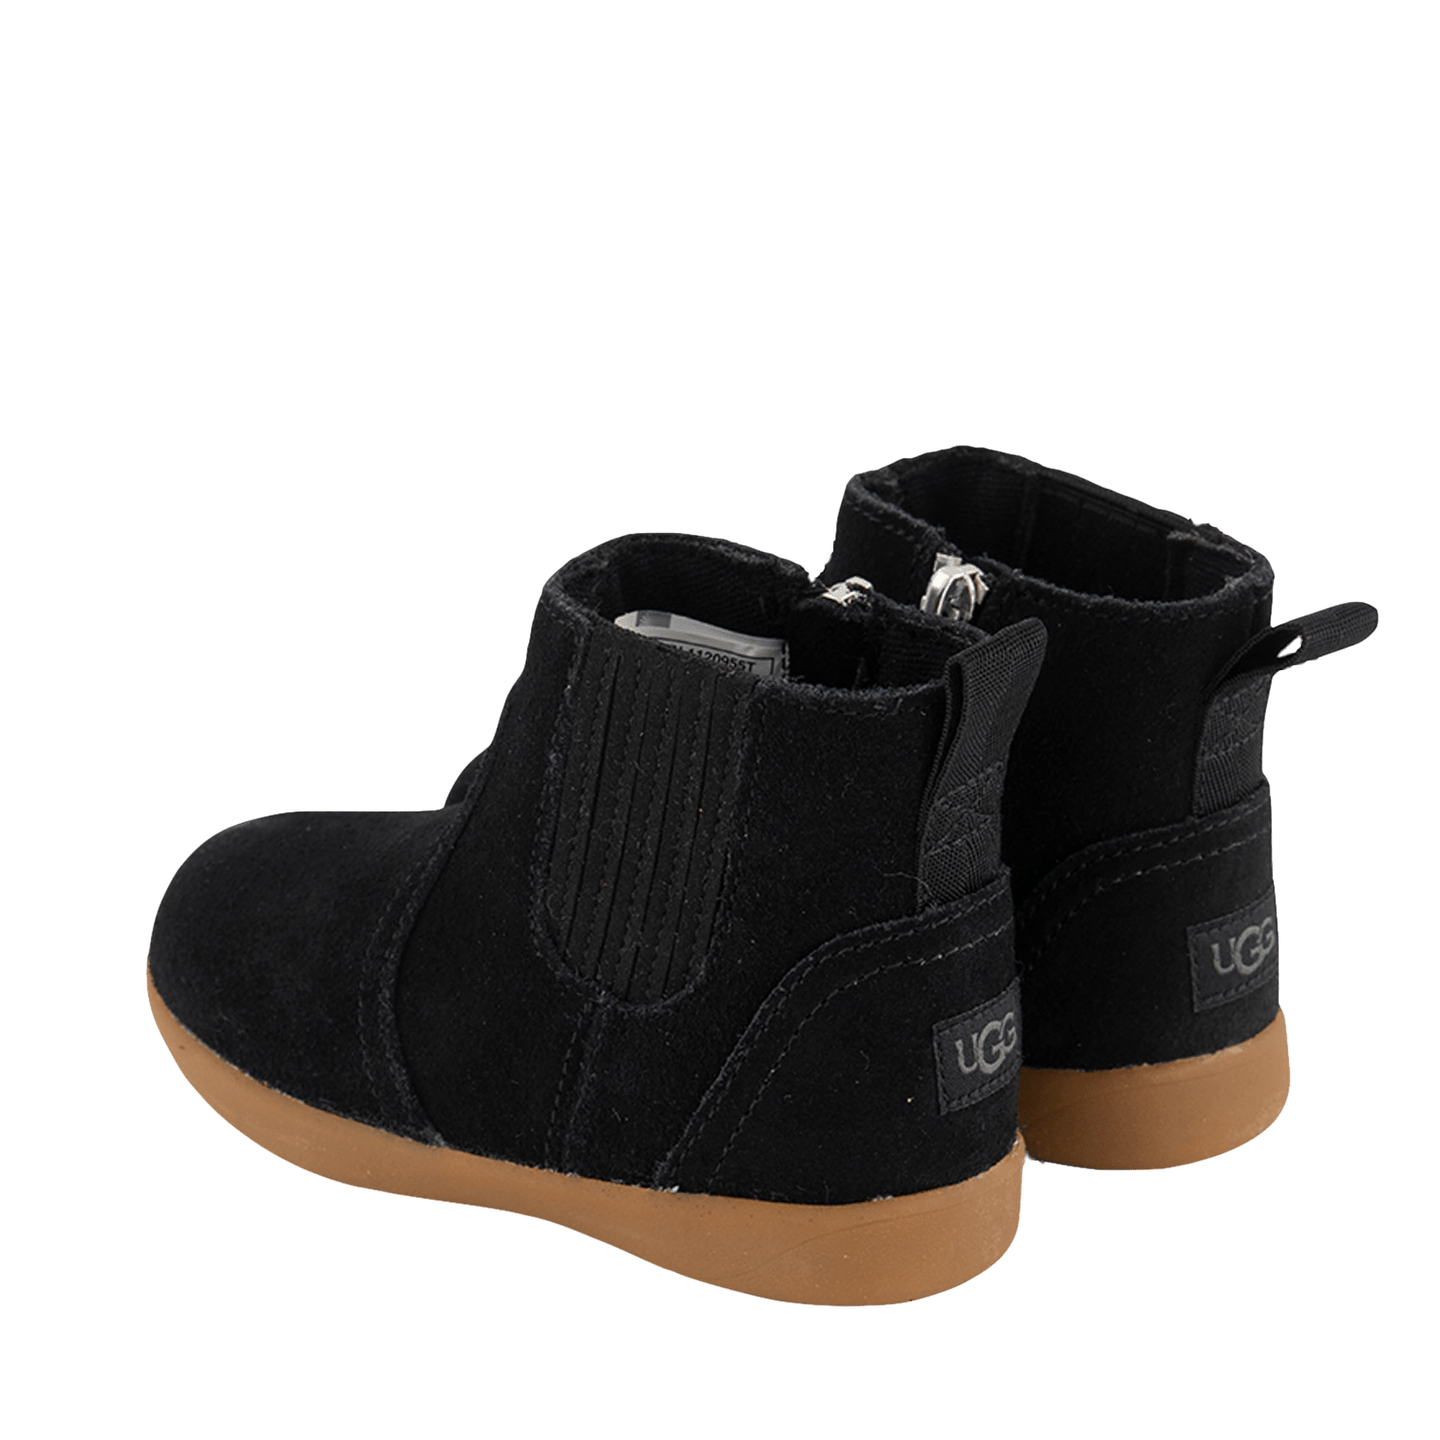 UGG Kinder Unisex Laarzen Zwart 25